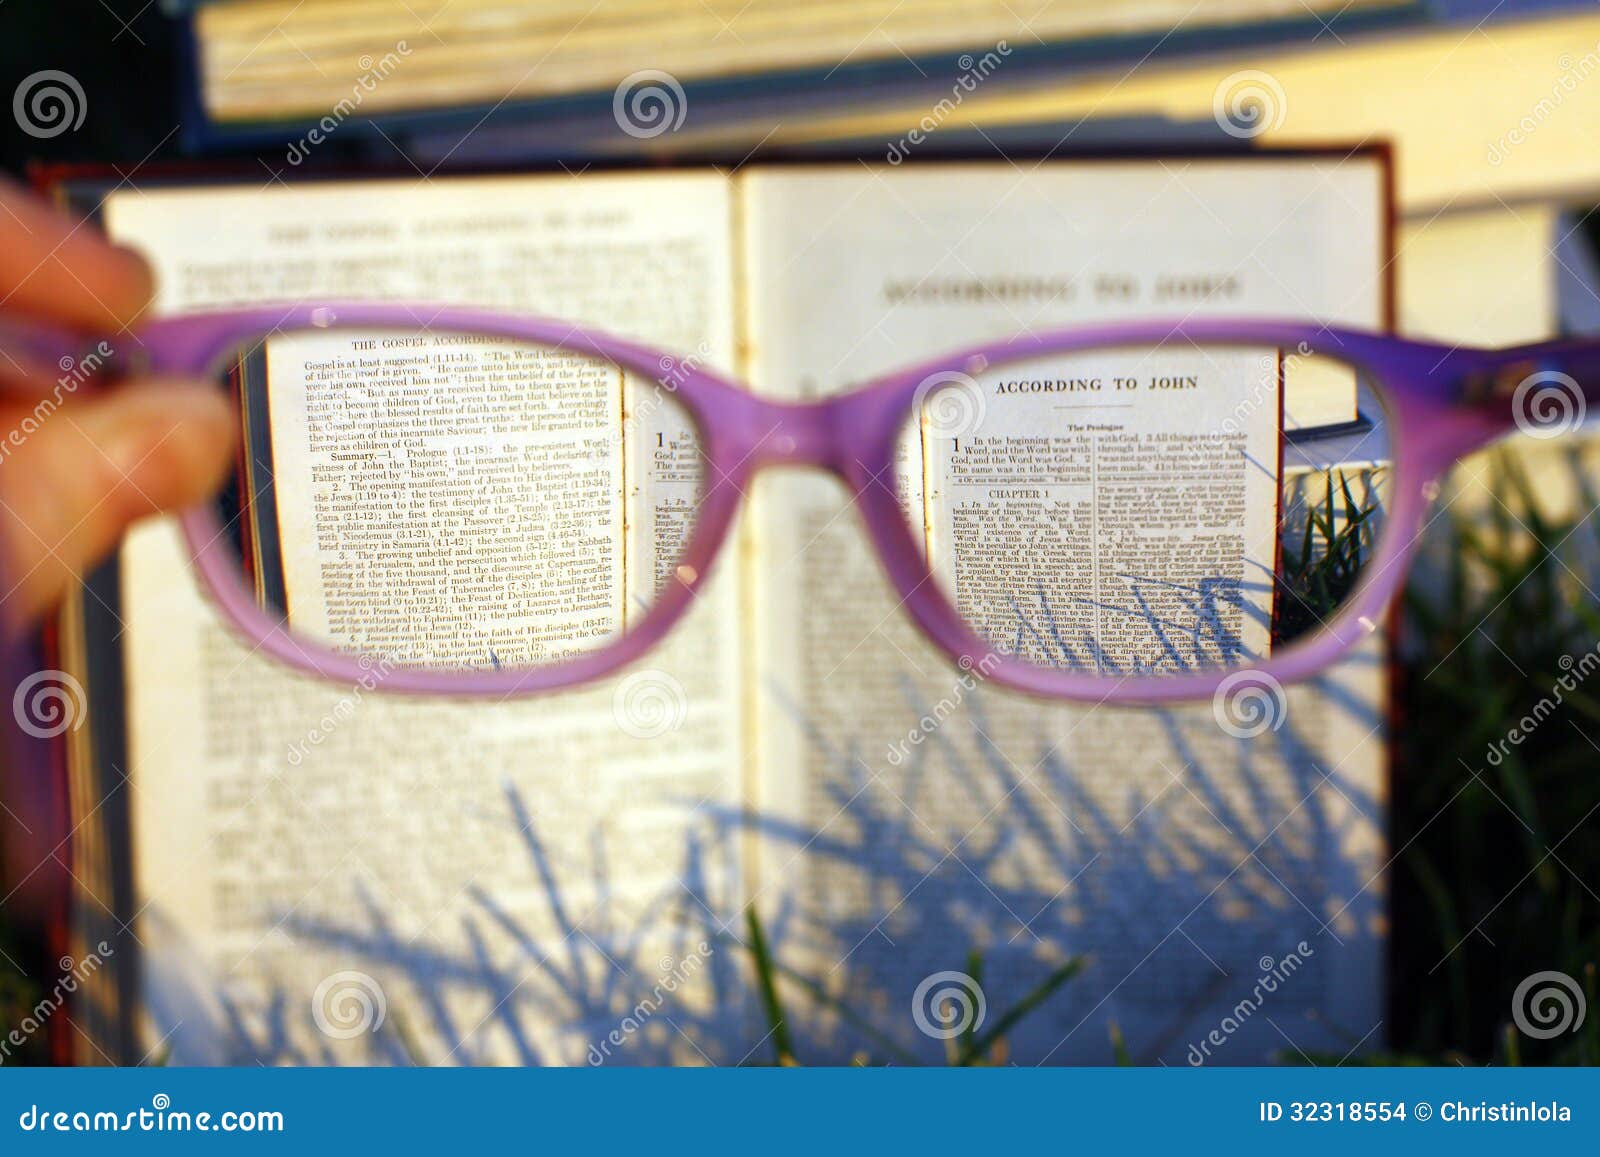 reading bible through glasses